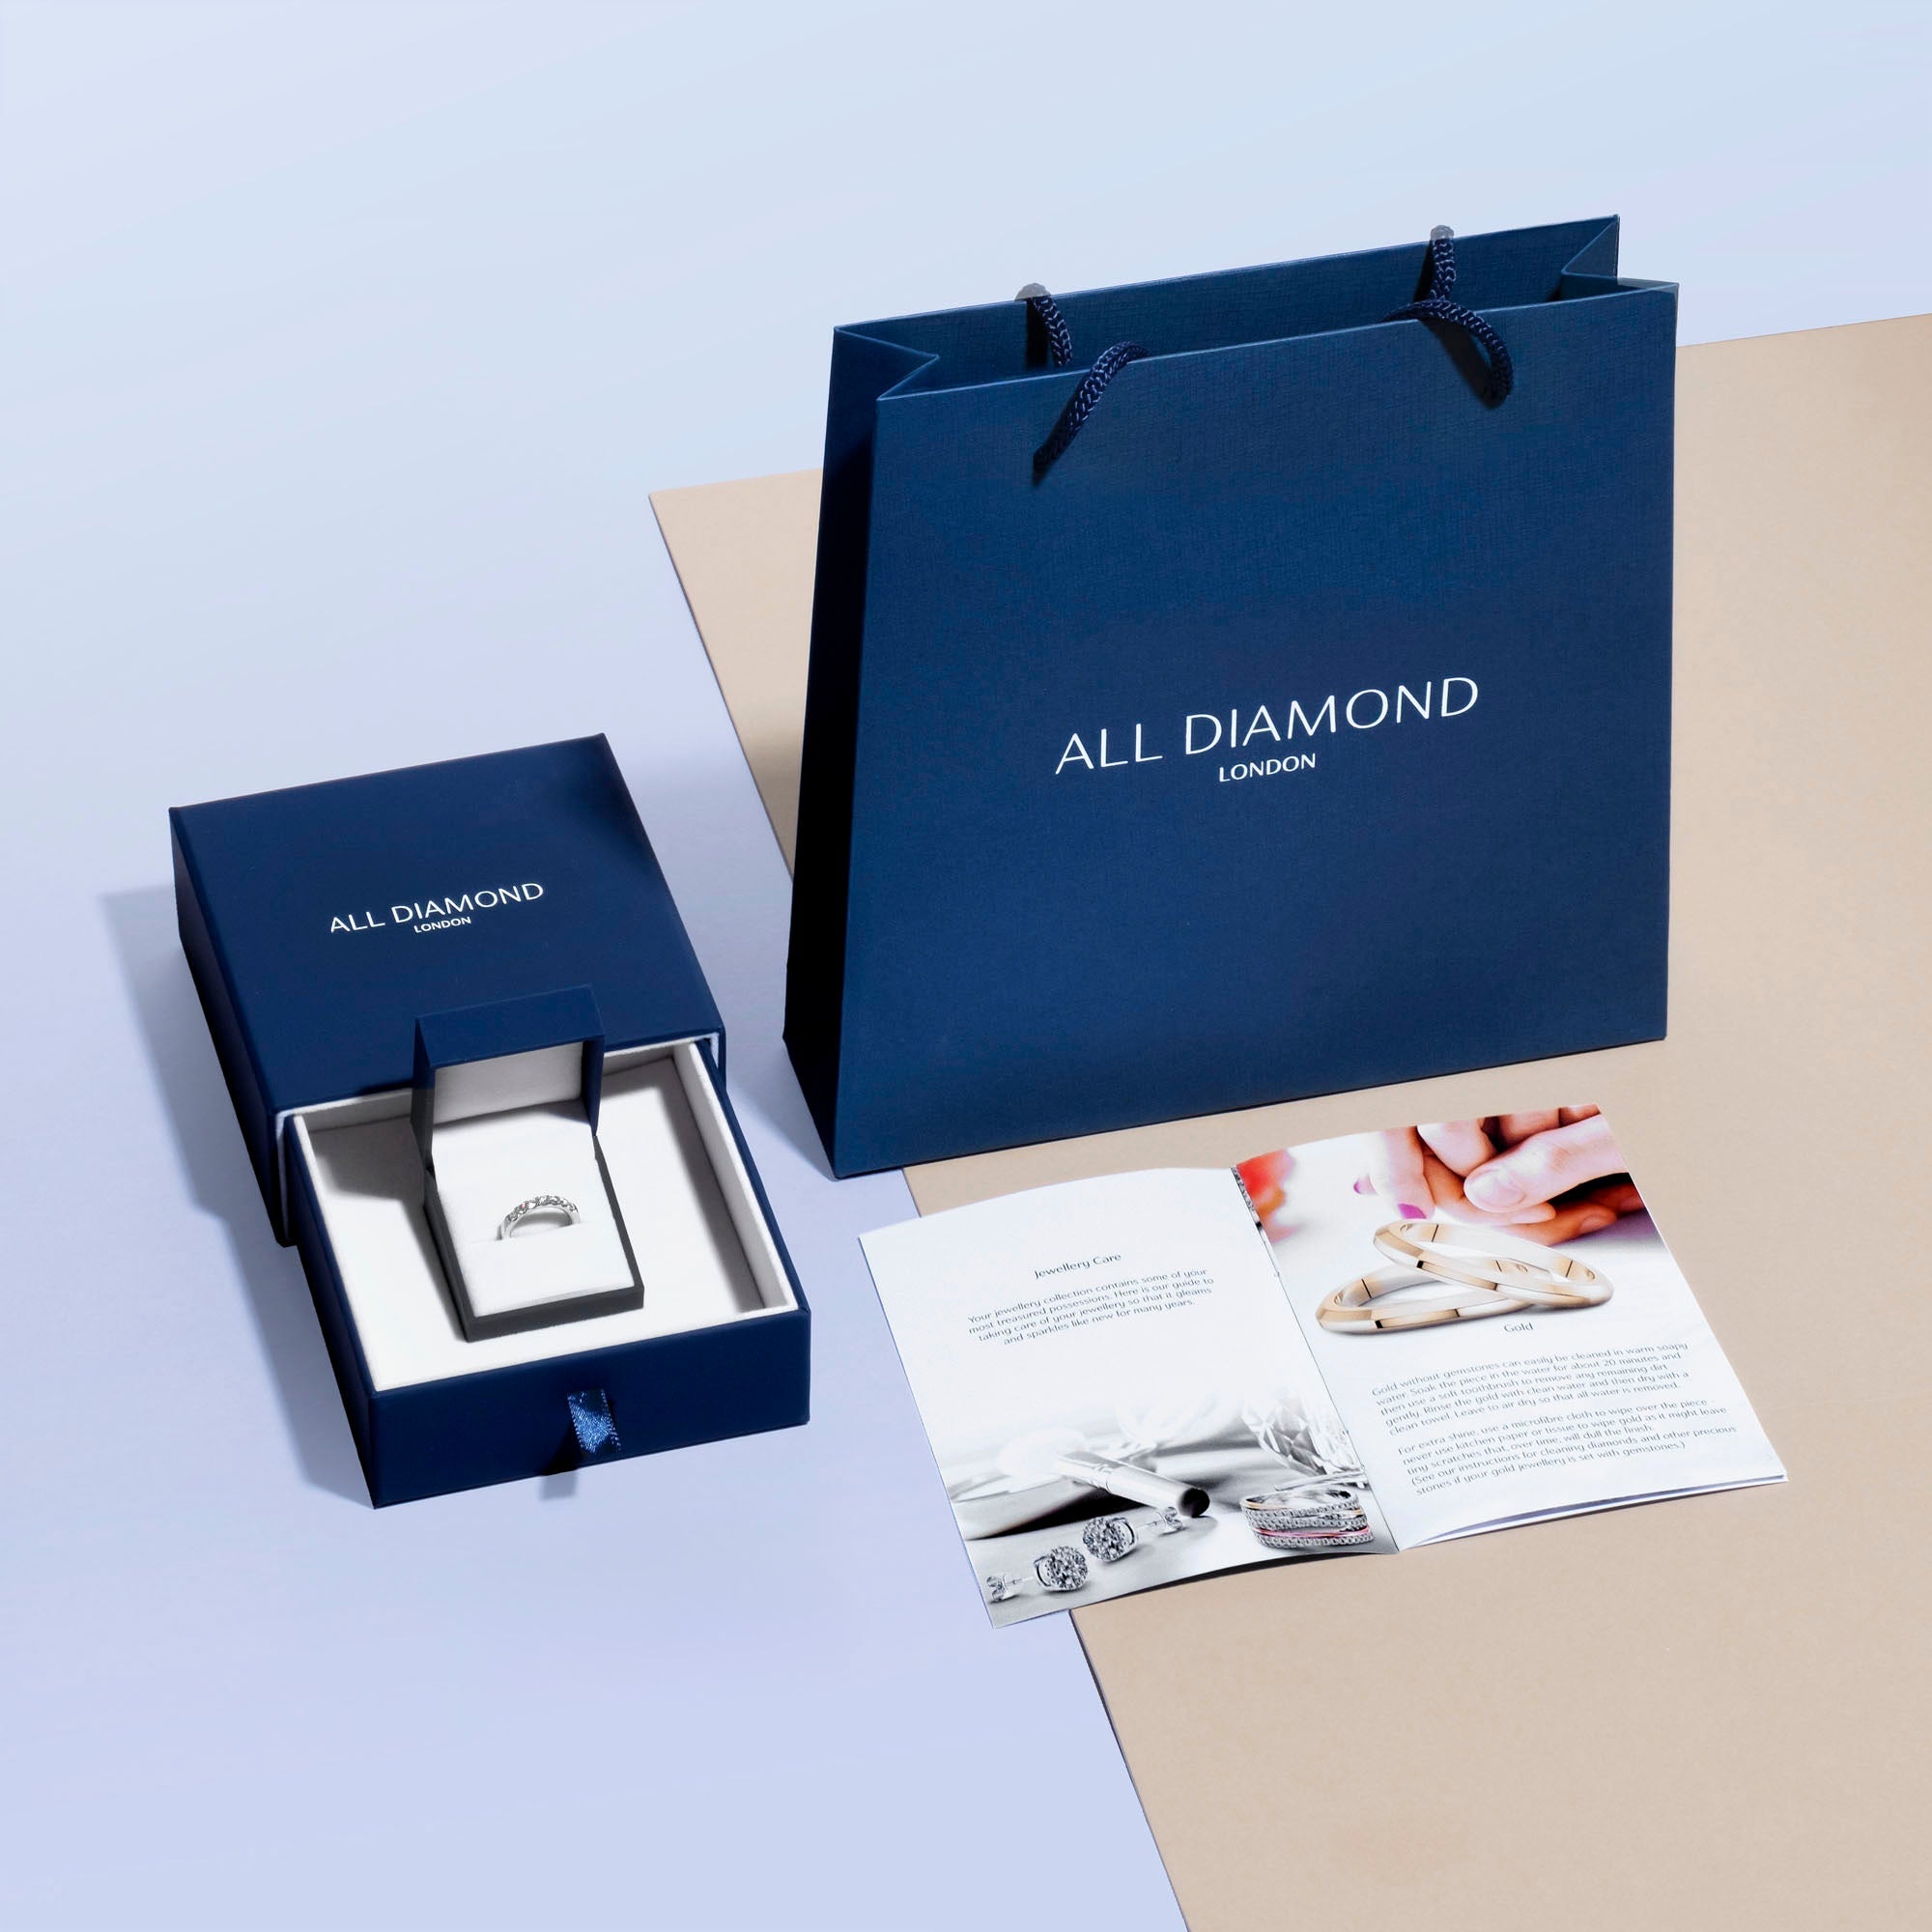 Halo Aquamarine 1.31ct and Diamond 0.38ct Ring in Platinum - All Diamond